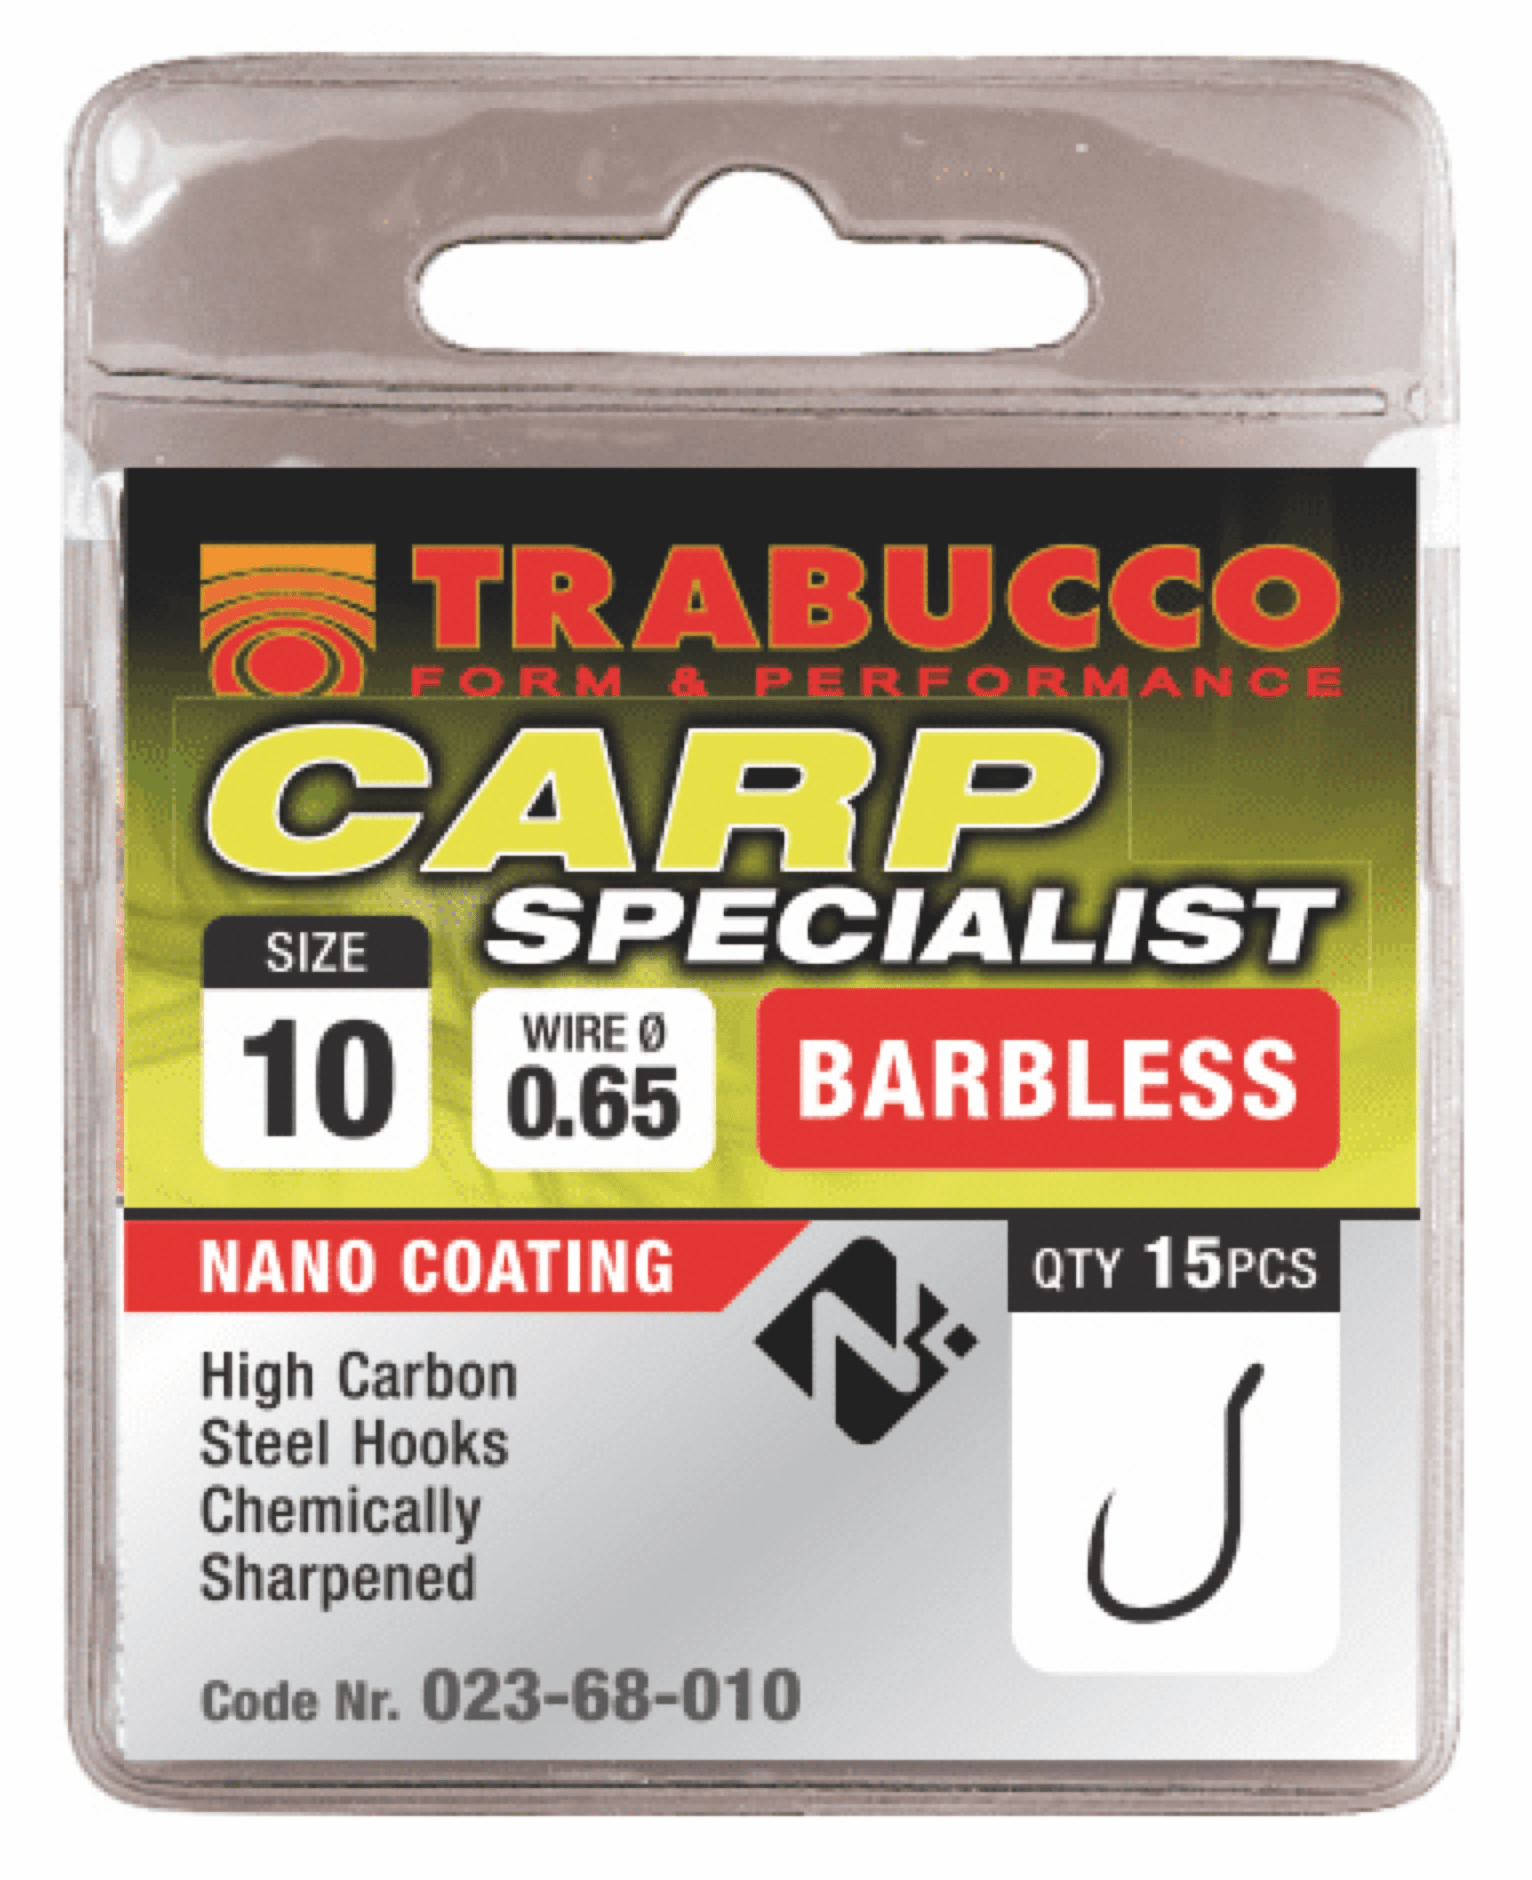 Trabucco carp specialist barbless eyed